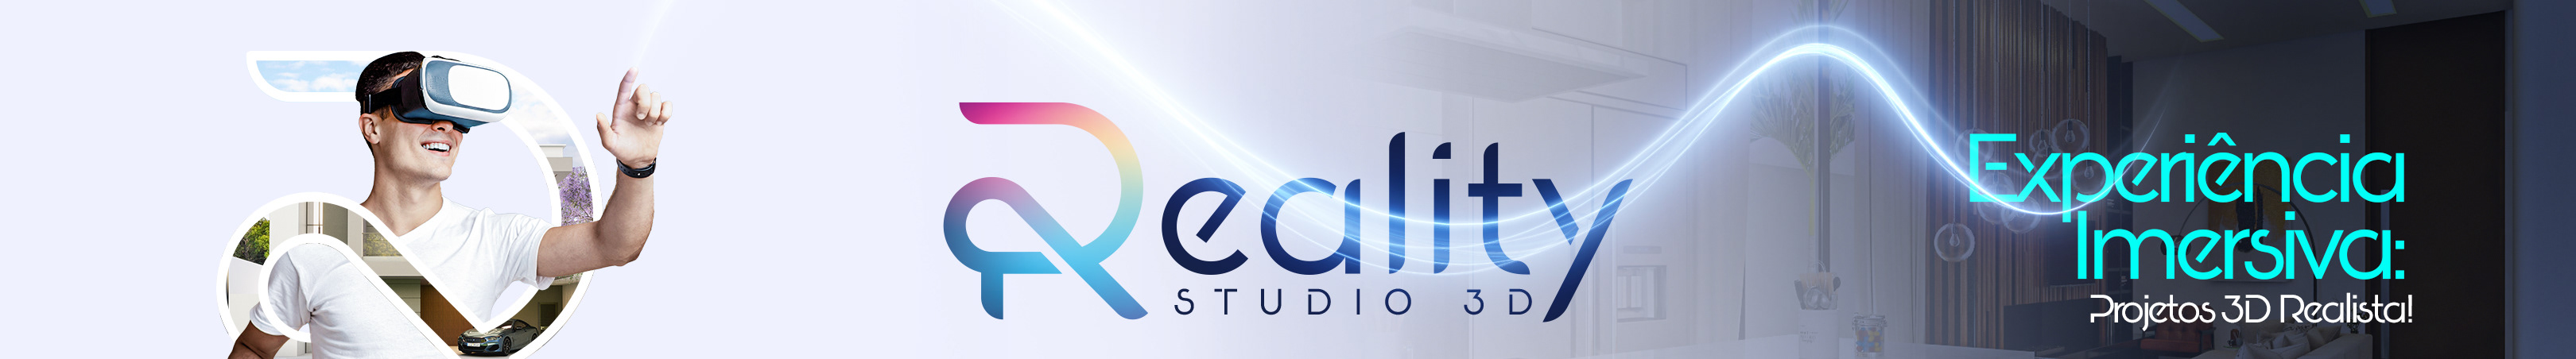 RealityStudio3D 3d's profile banner